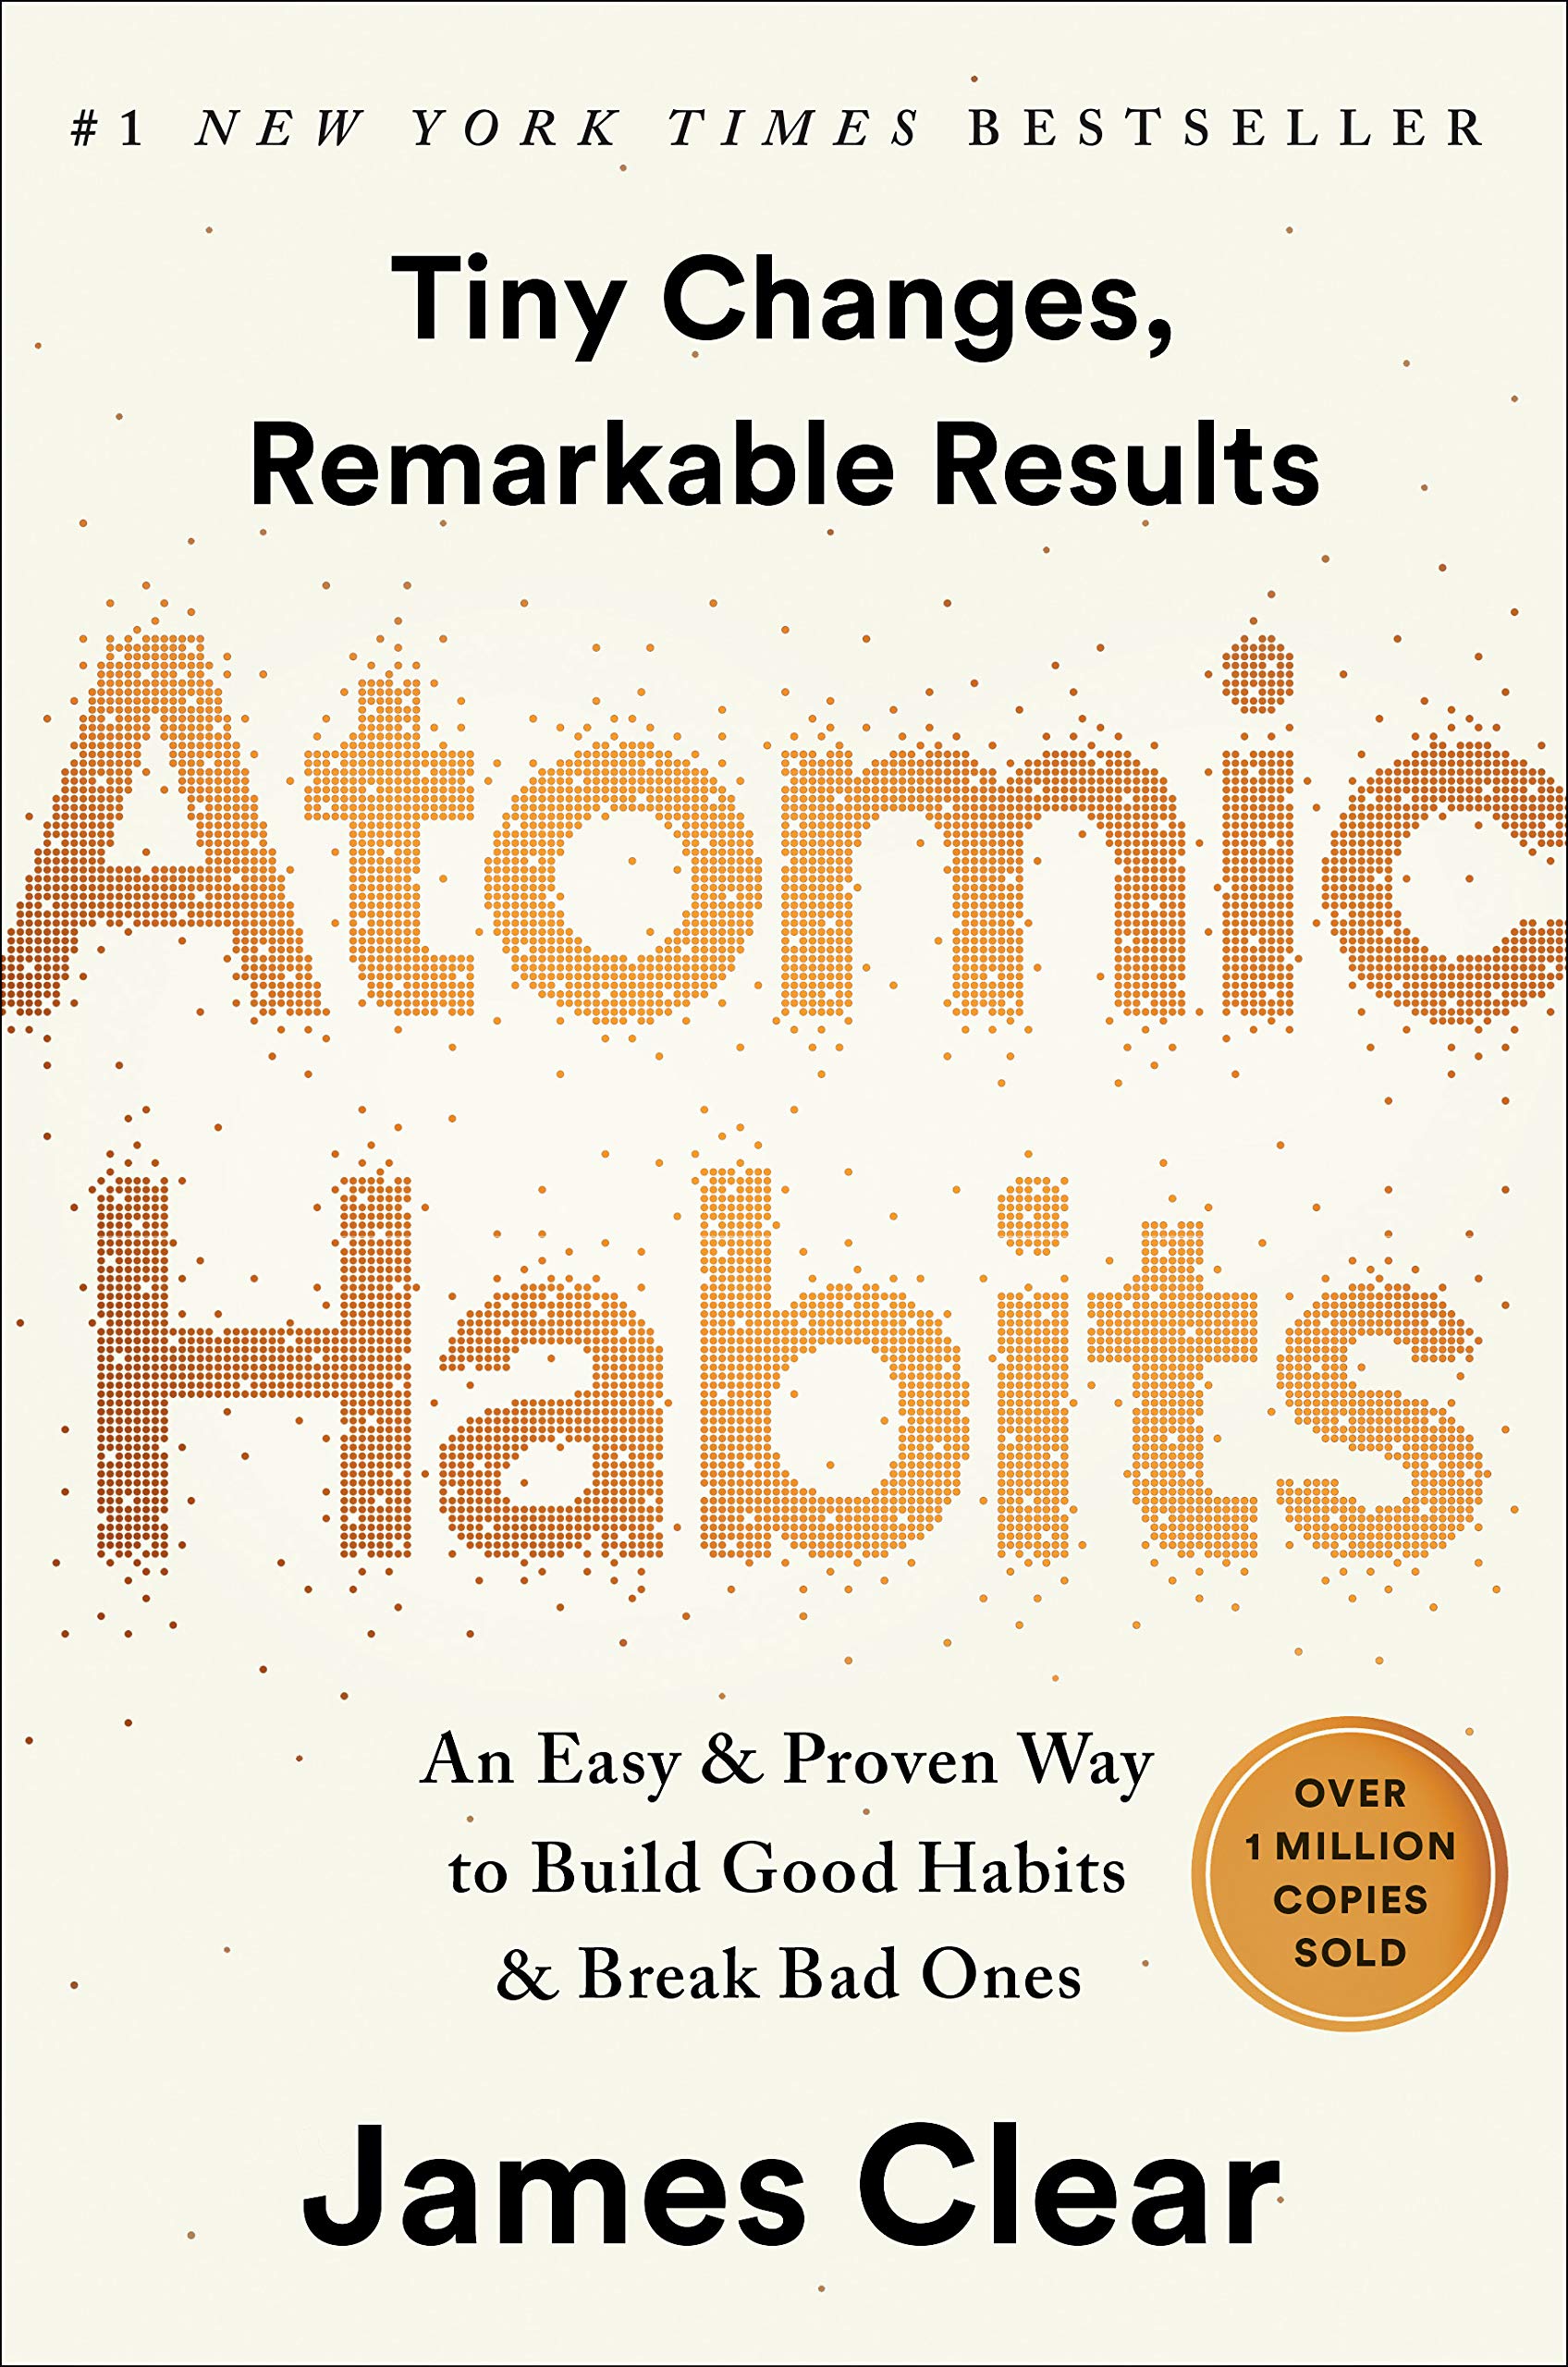 atomic habits review